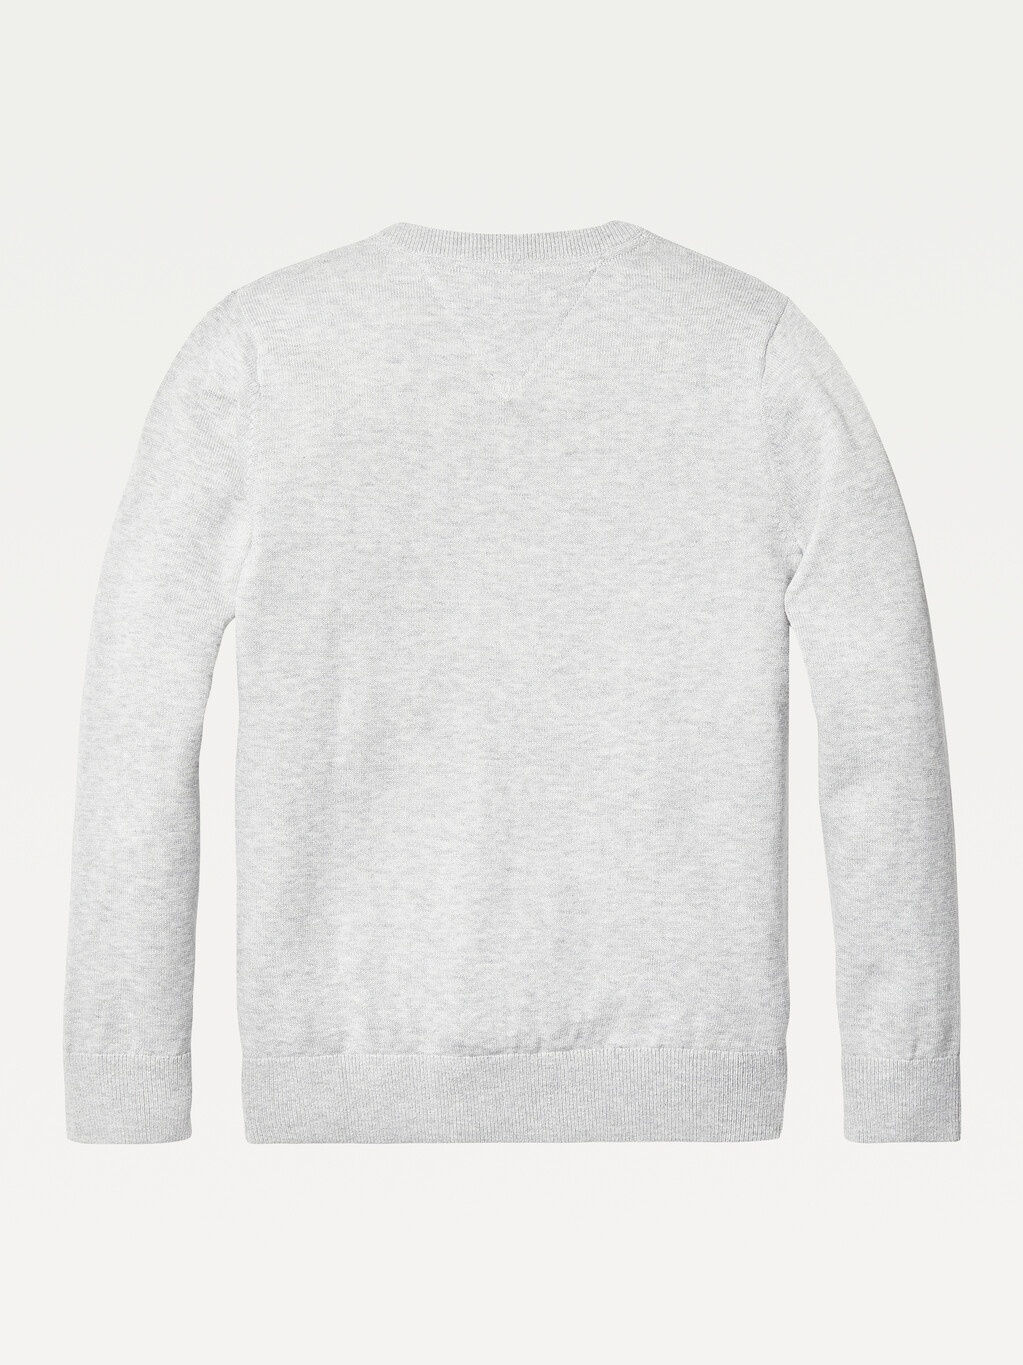 Boys V Neck Sweater, Grey Heather, hi-res